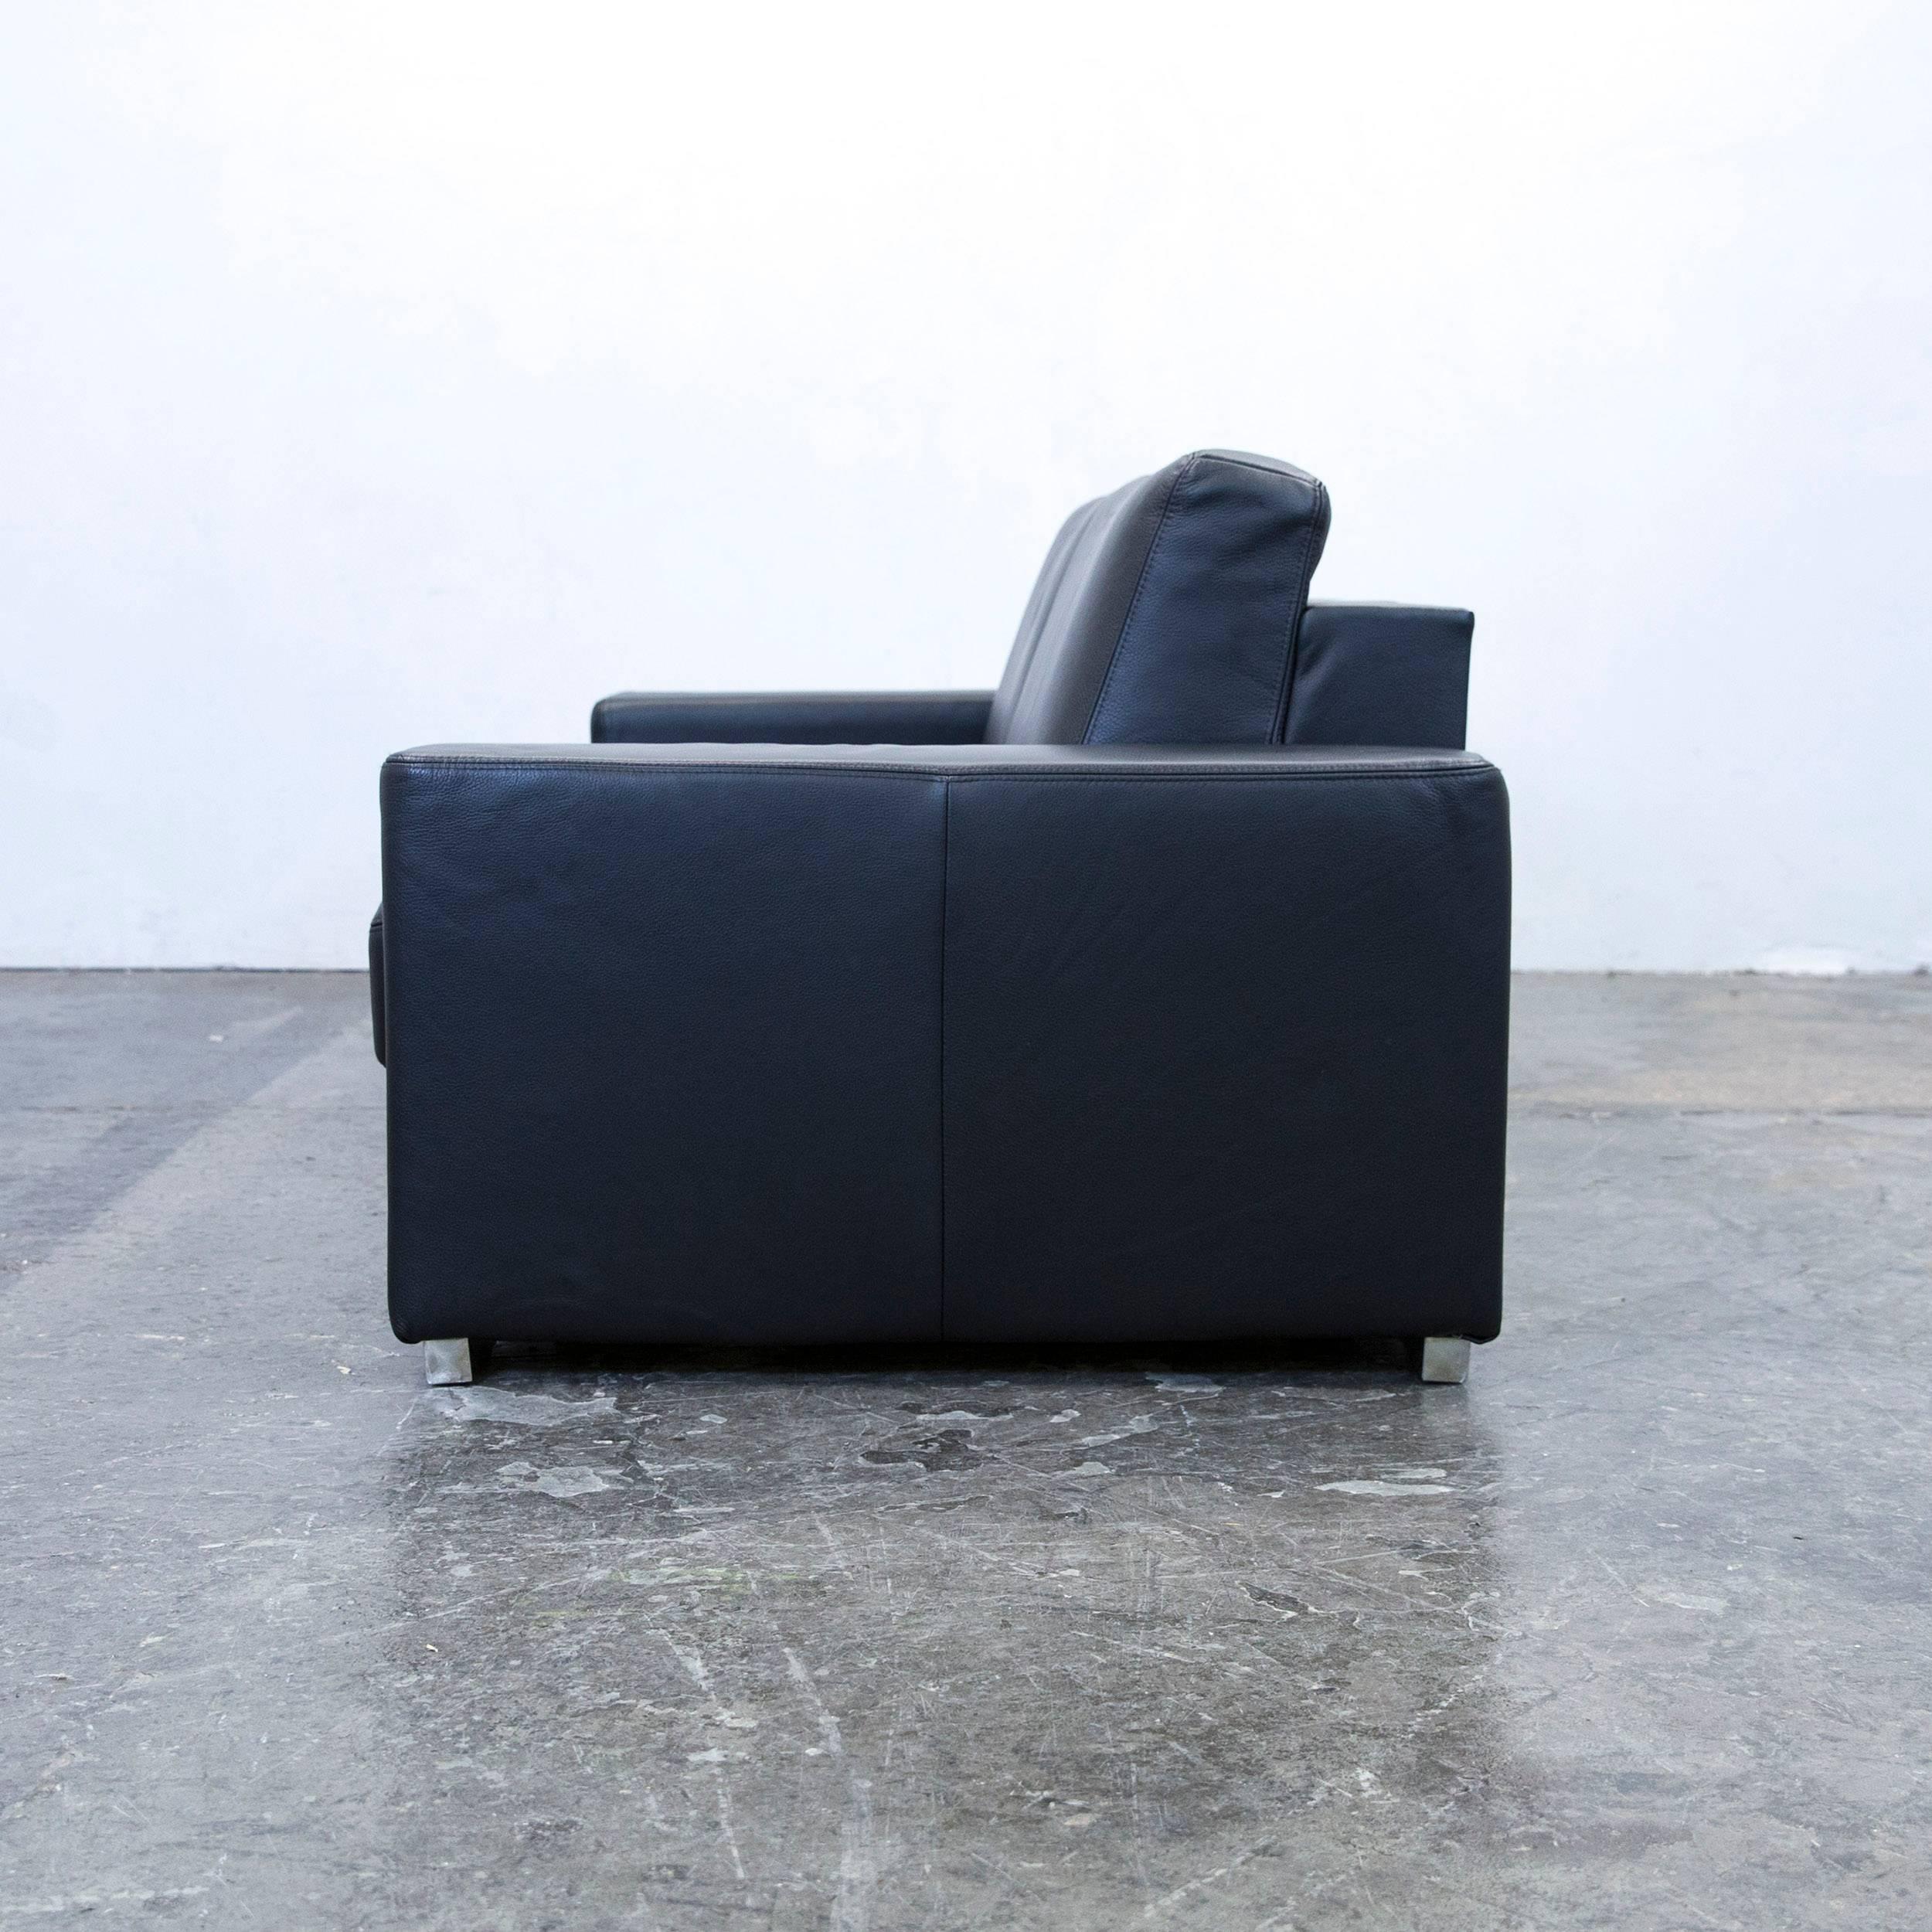 Designer Sleepsofa Set Leather Black Function Couch Topper Modern Footstool 2